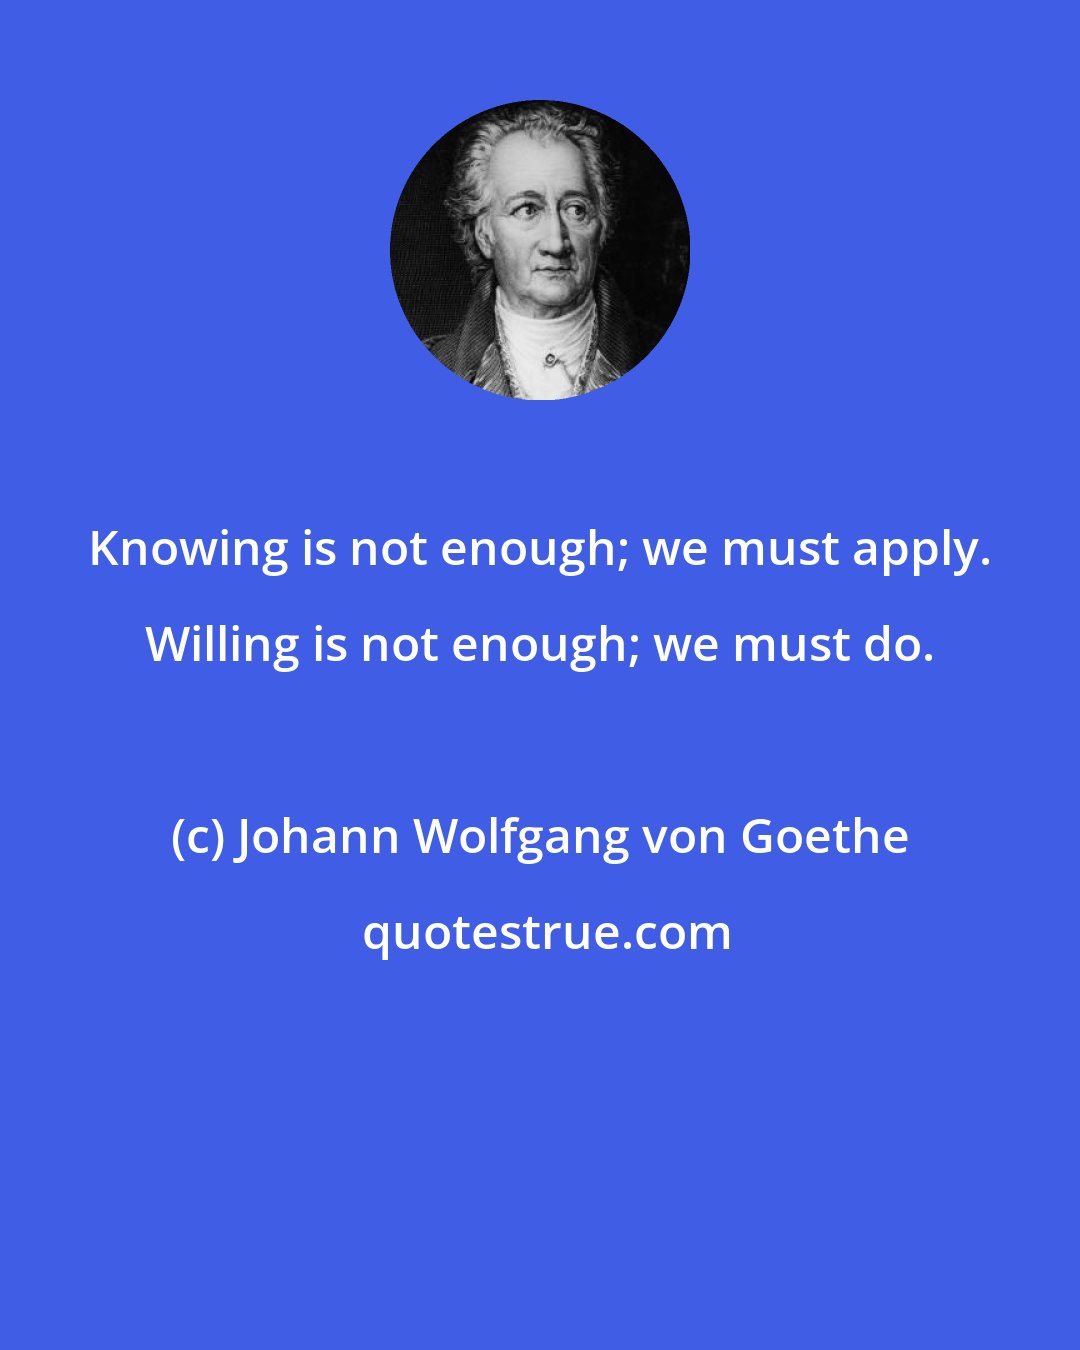 Johann Wolfgang von Goethe: Knowing is not enough; we must apply. Willing is not enough; we must do.